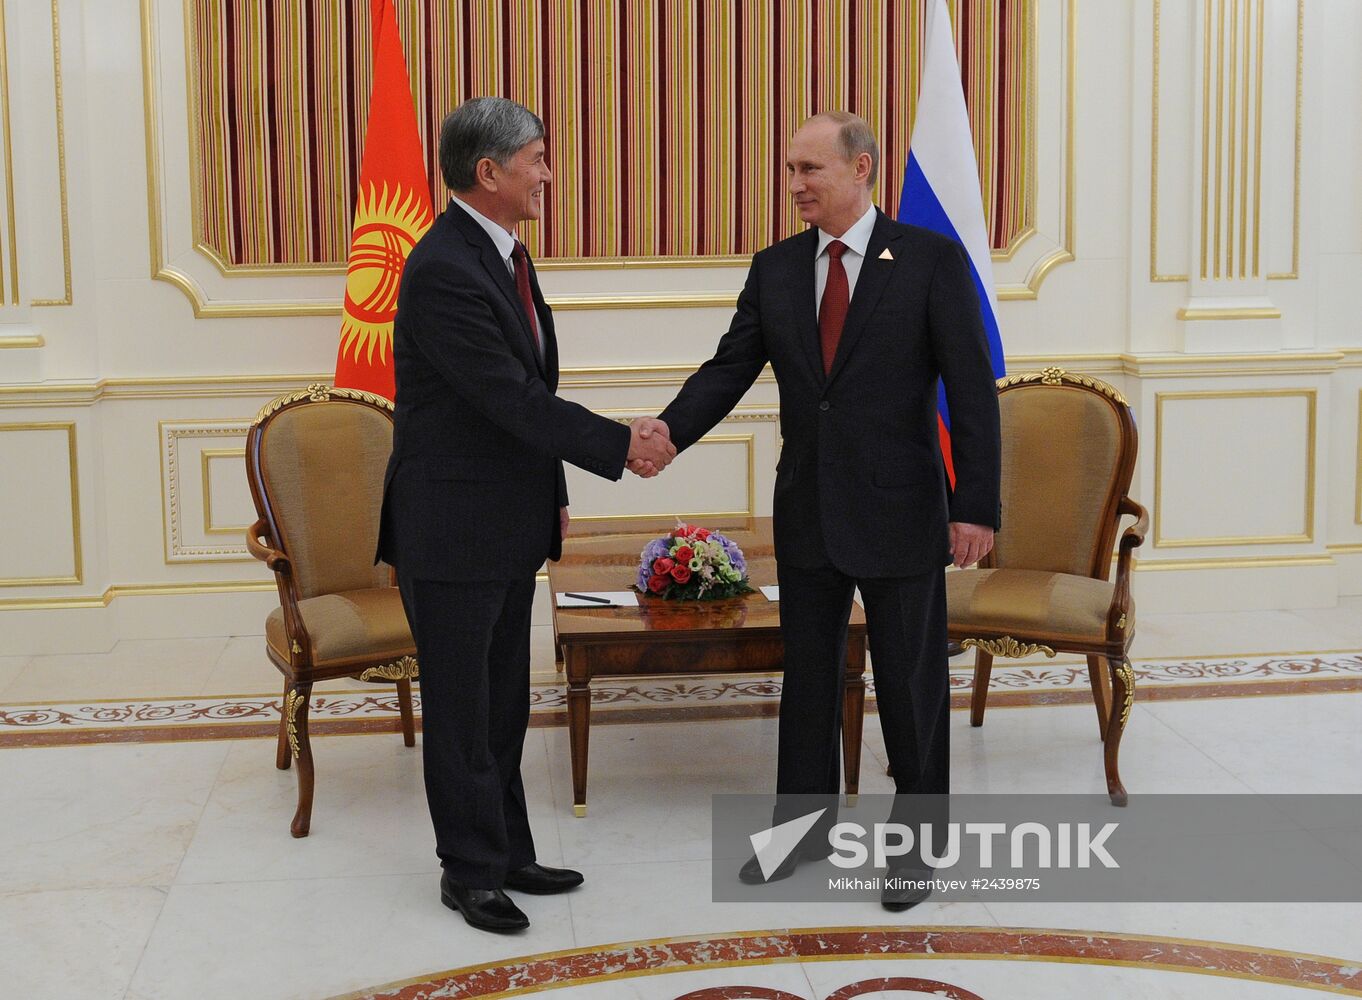 Vladimir Putin visits Astana for Supreme Eurasian Economic Council meeting